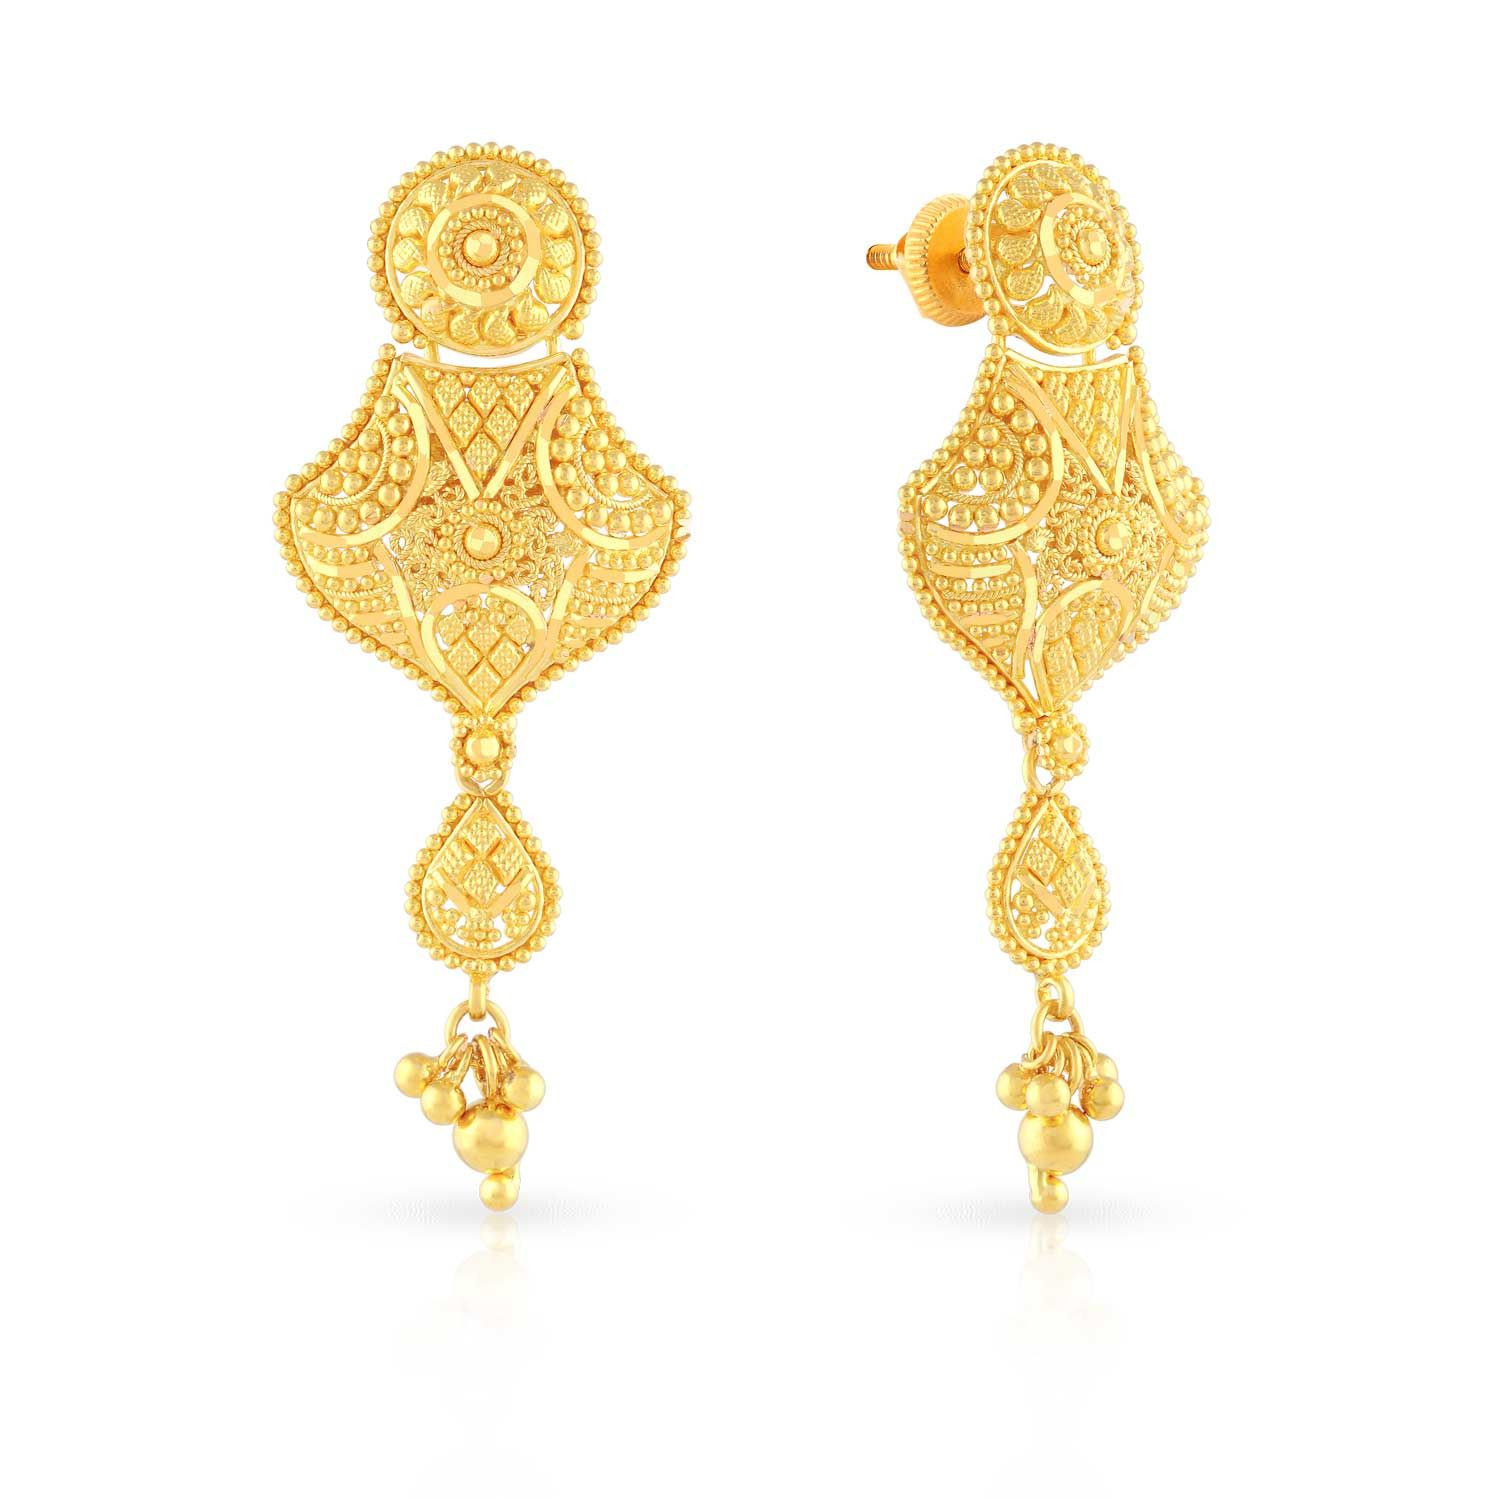 Malabar Gold and Diamonds 22 KT 916 purity Two Tone Gold Malabar Gold  Earring EGDSNO052T for Women  Amazonin Fashion